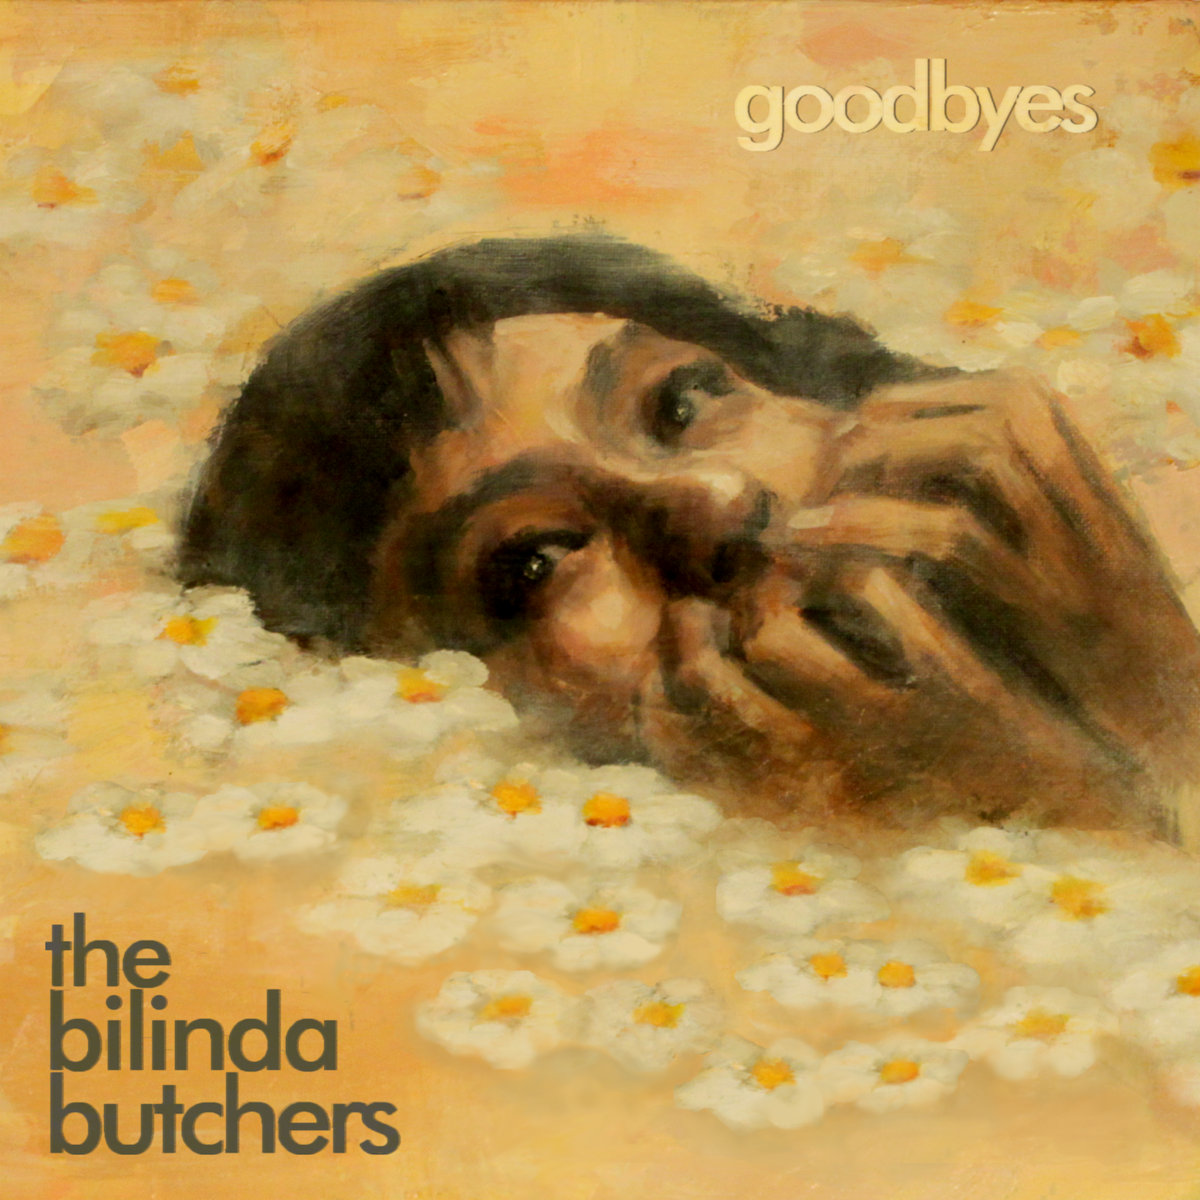 The Bilinda Butchers Goodbyes cover artwork